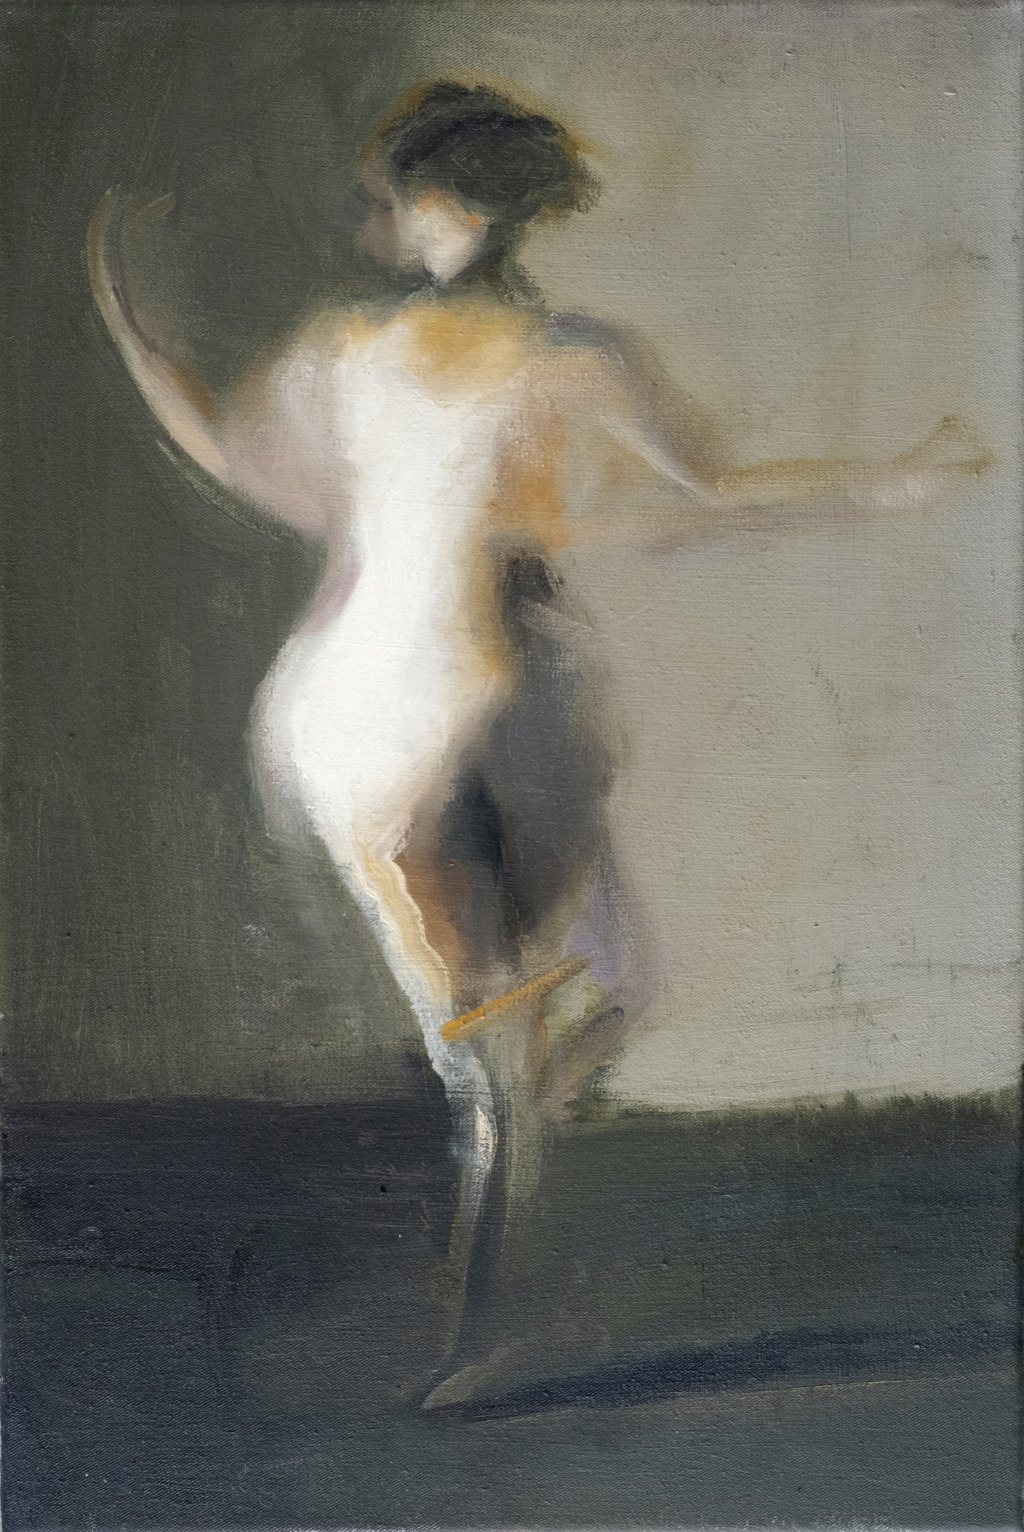 Andrea Muheim, Semah III, 2020
Oil on canvas
45 x 30 cm